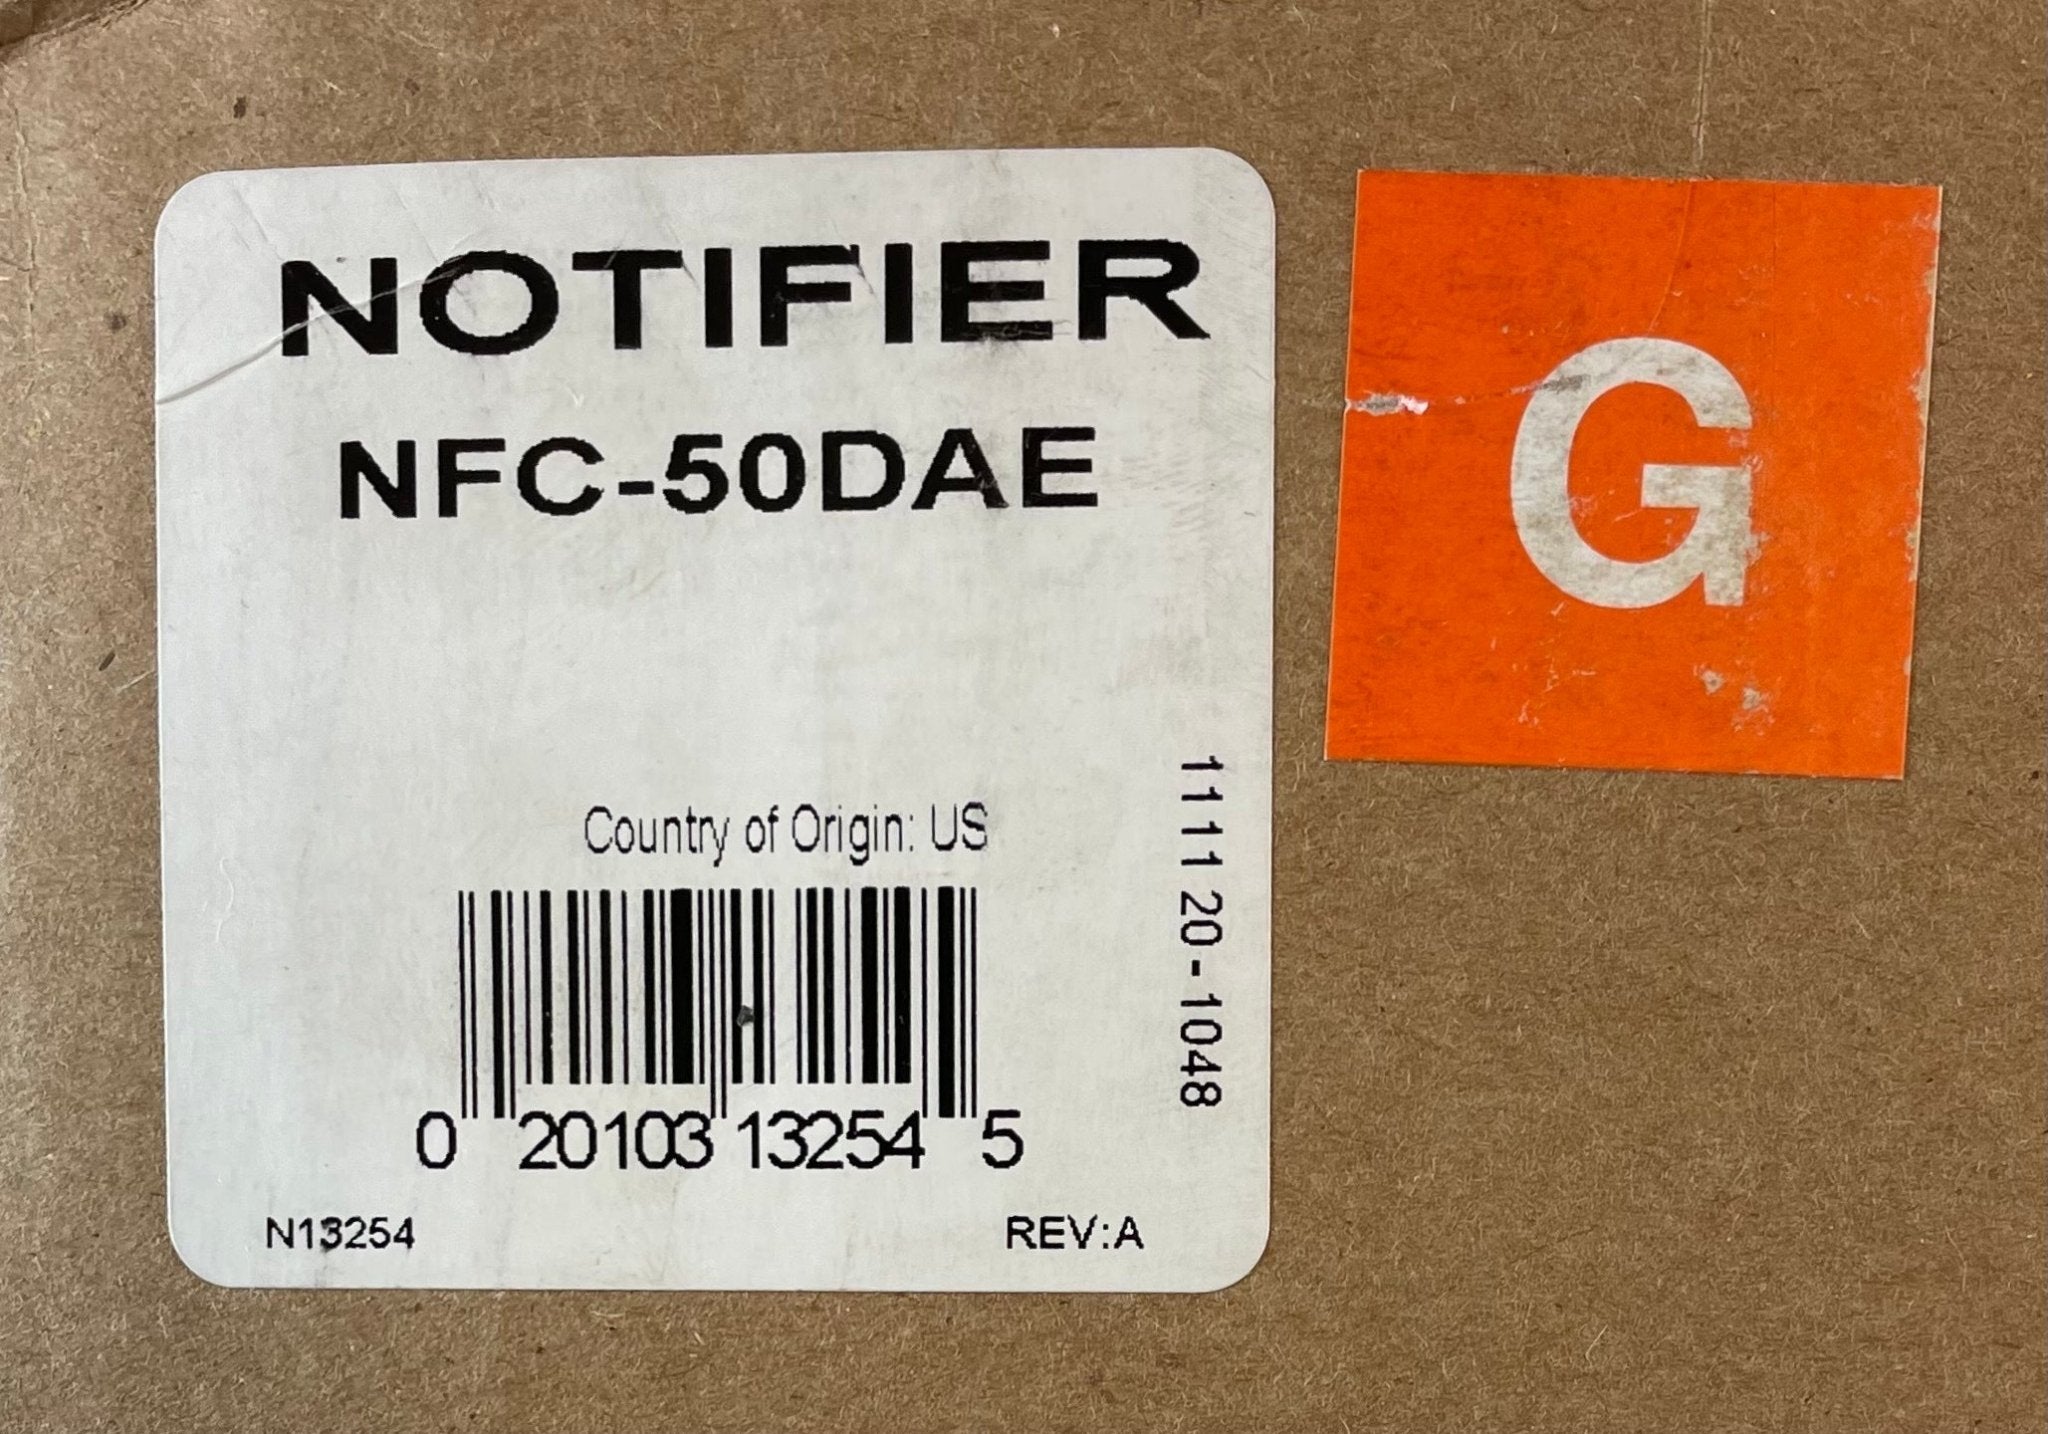 Notifier NFC-50DAE - The Fire Alarm Supplier